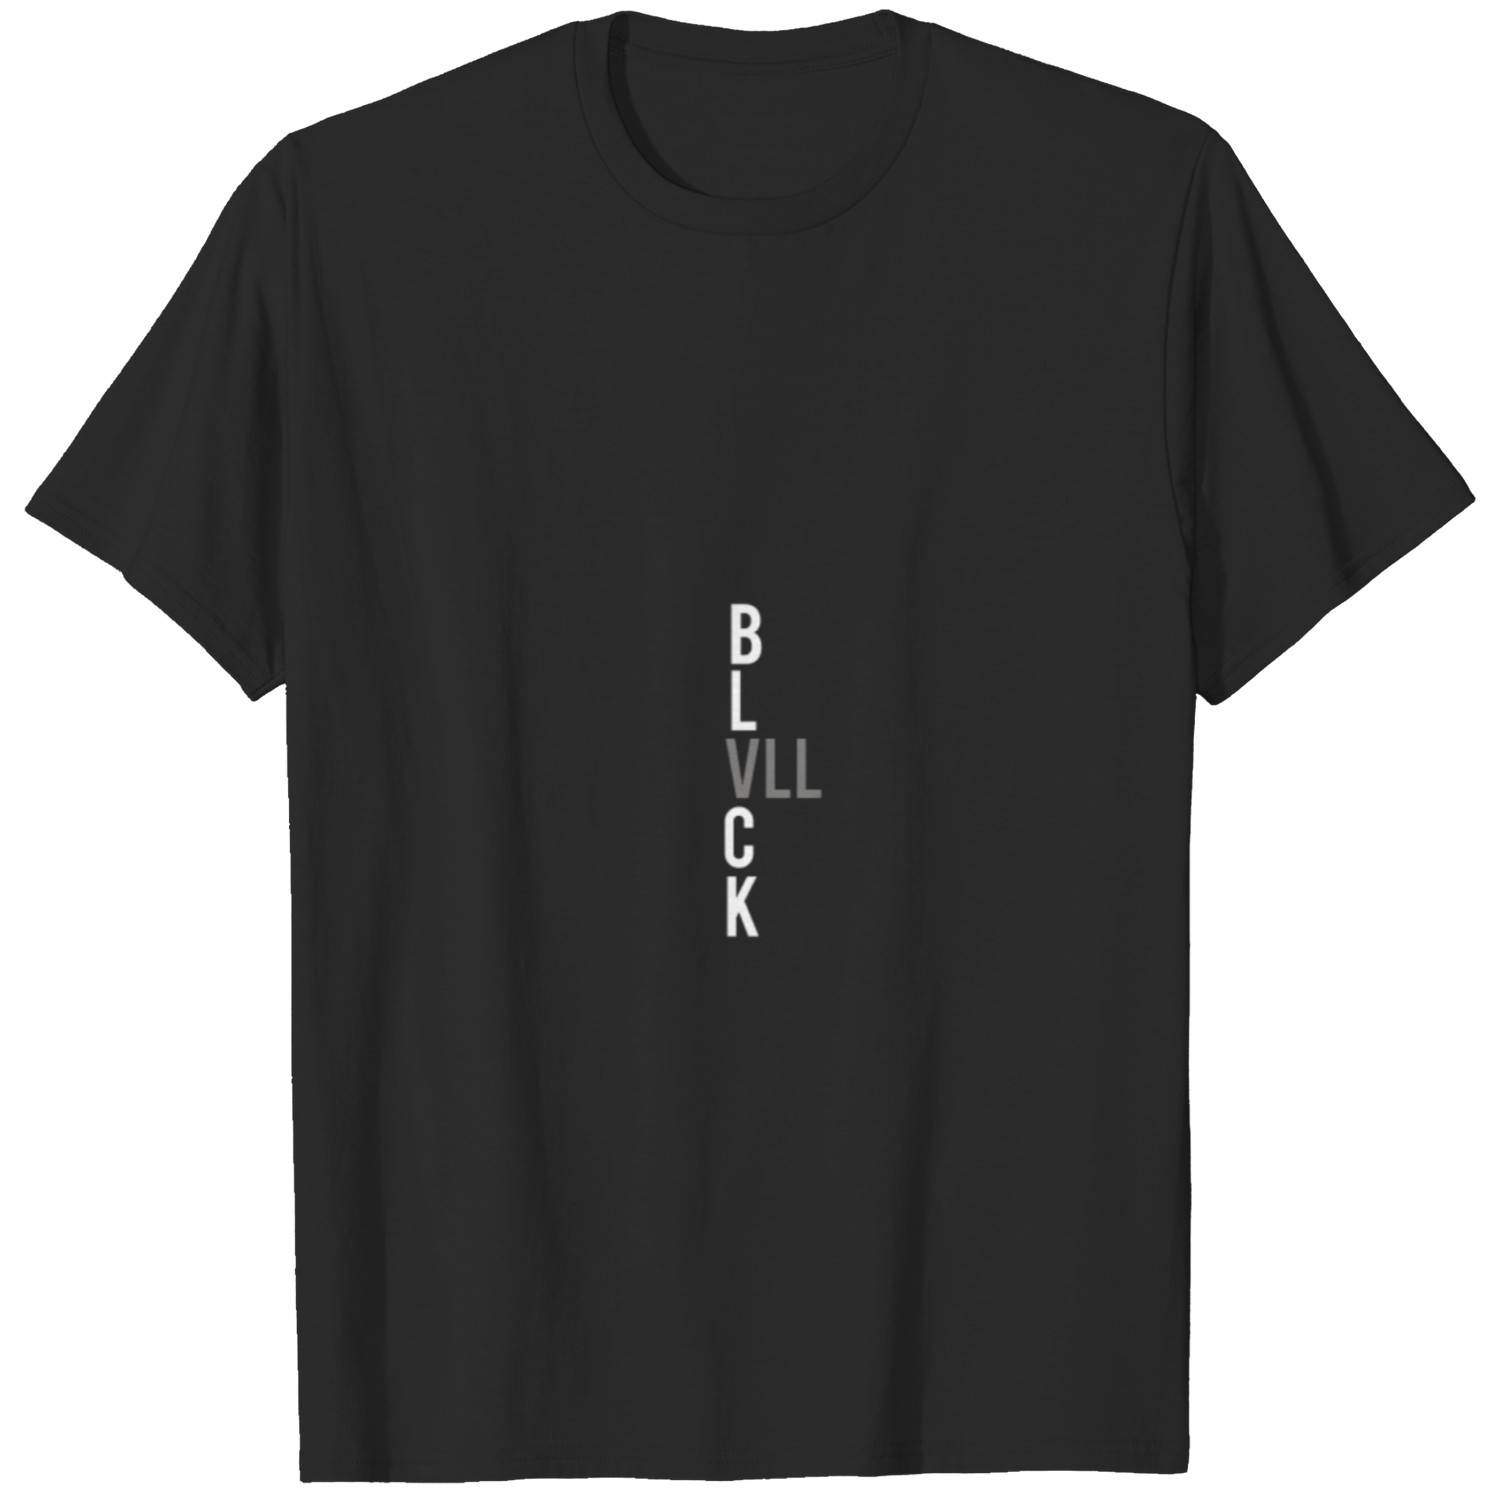 All Blvck T-shirt